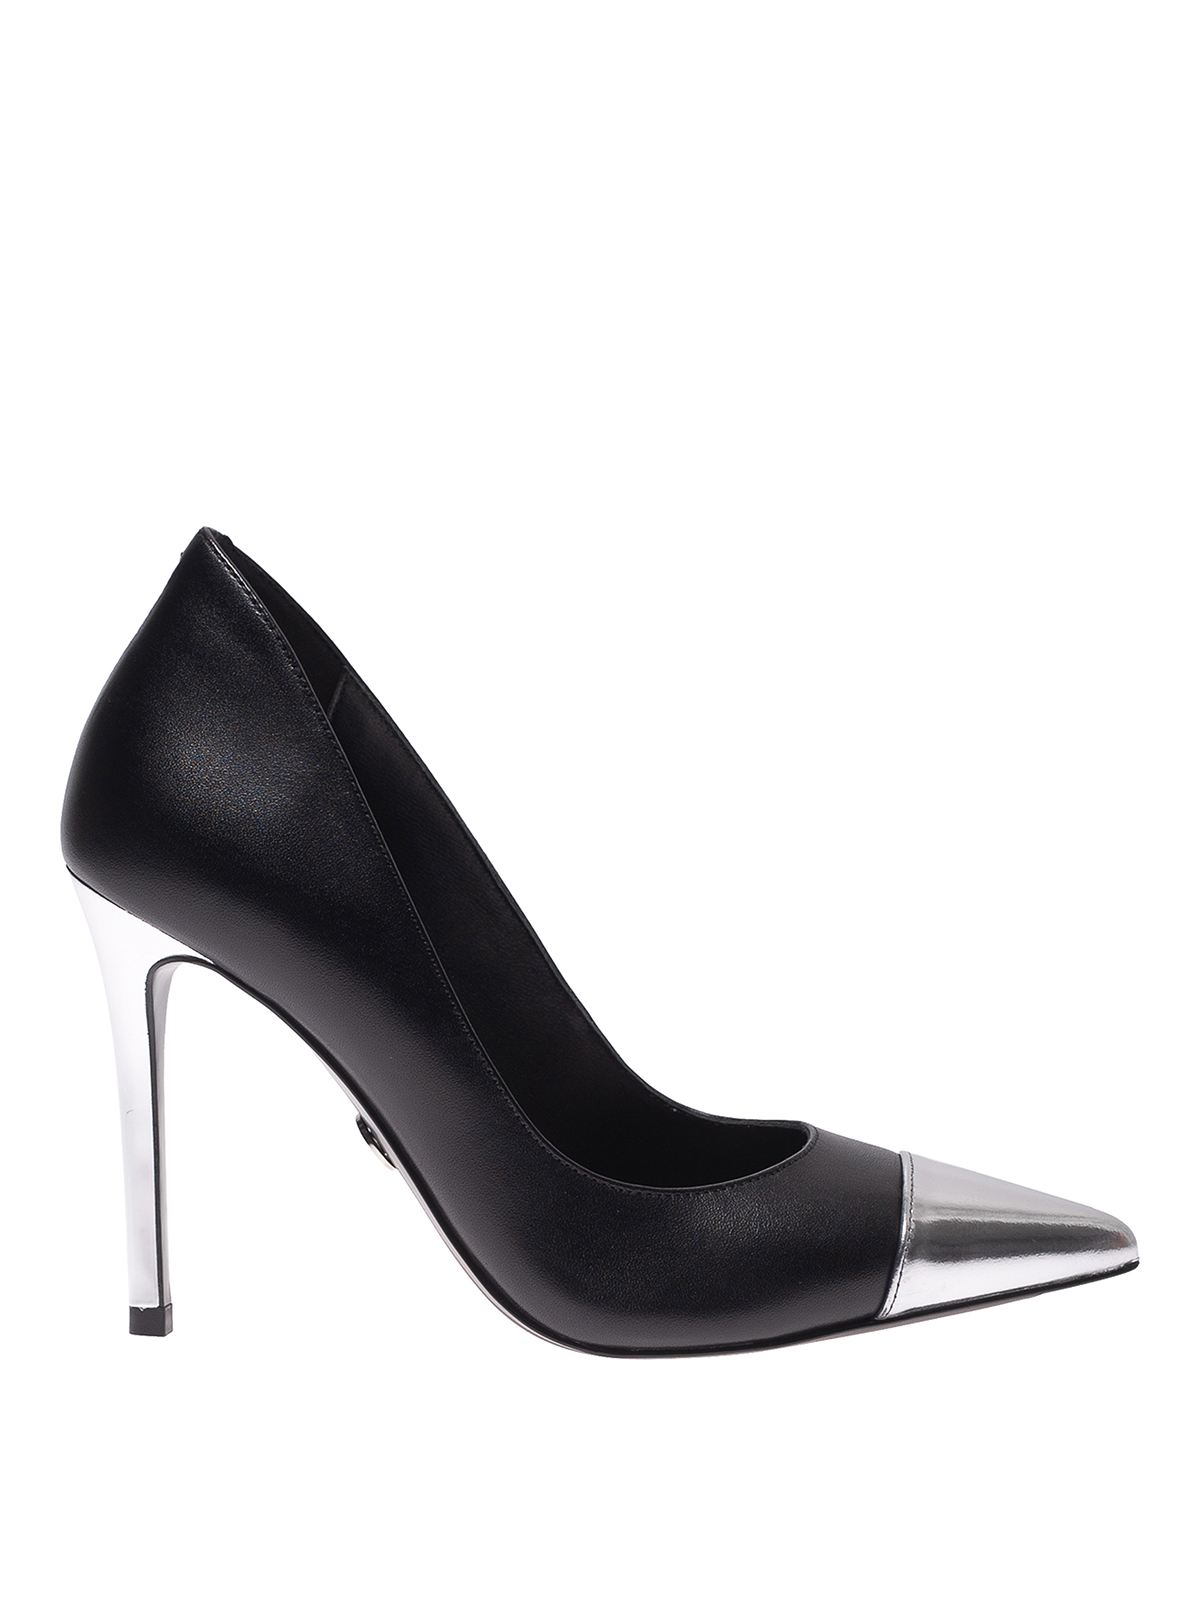 Court shoes Michael Kors - Keke Toe Cap pumps featuring stacked heel ...